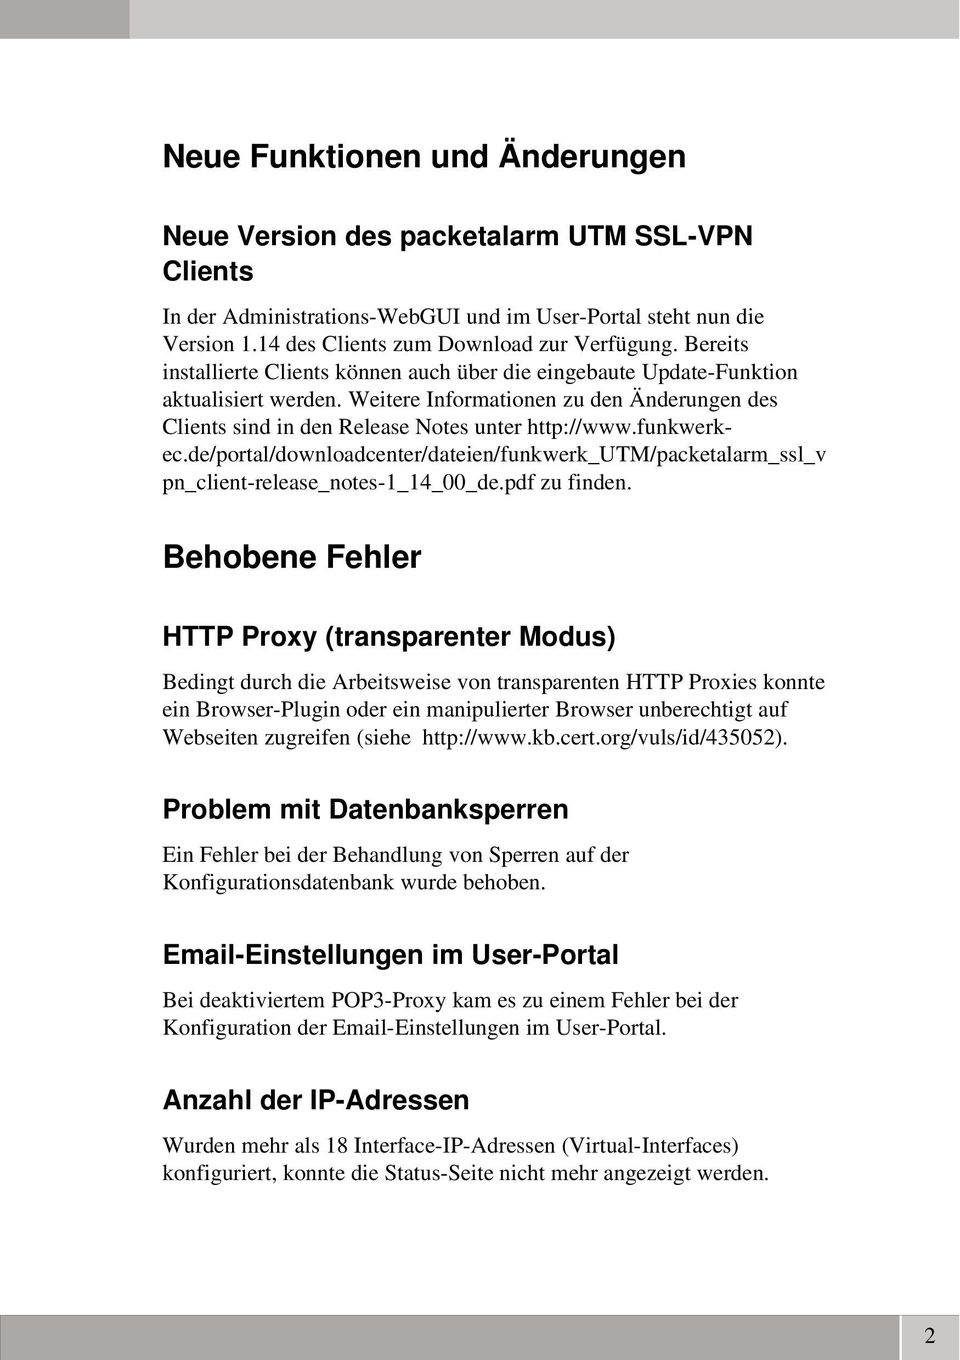 funkwerkec.de/portal/downloadcenter/dateien/funkwerk_utm/packetalarm_ssl_v pn_client release_notes 1_14_00_de.pdf zu finden.